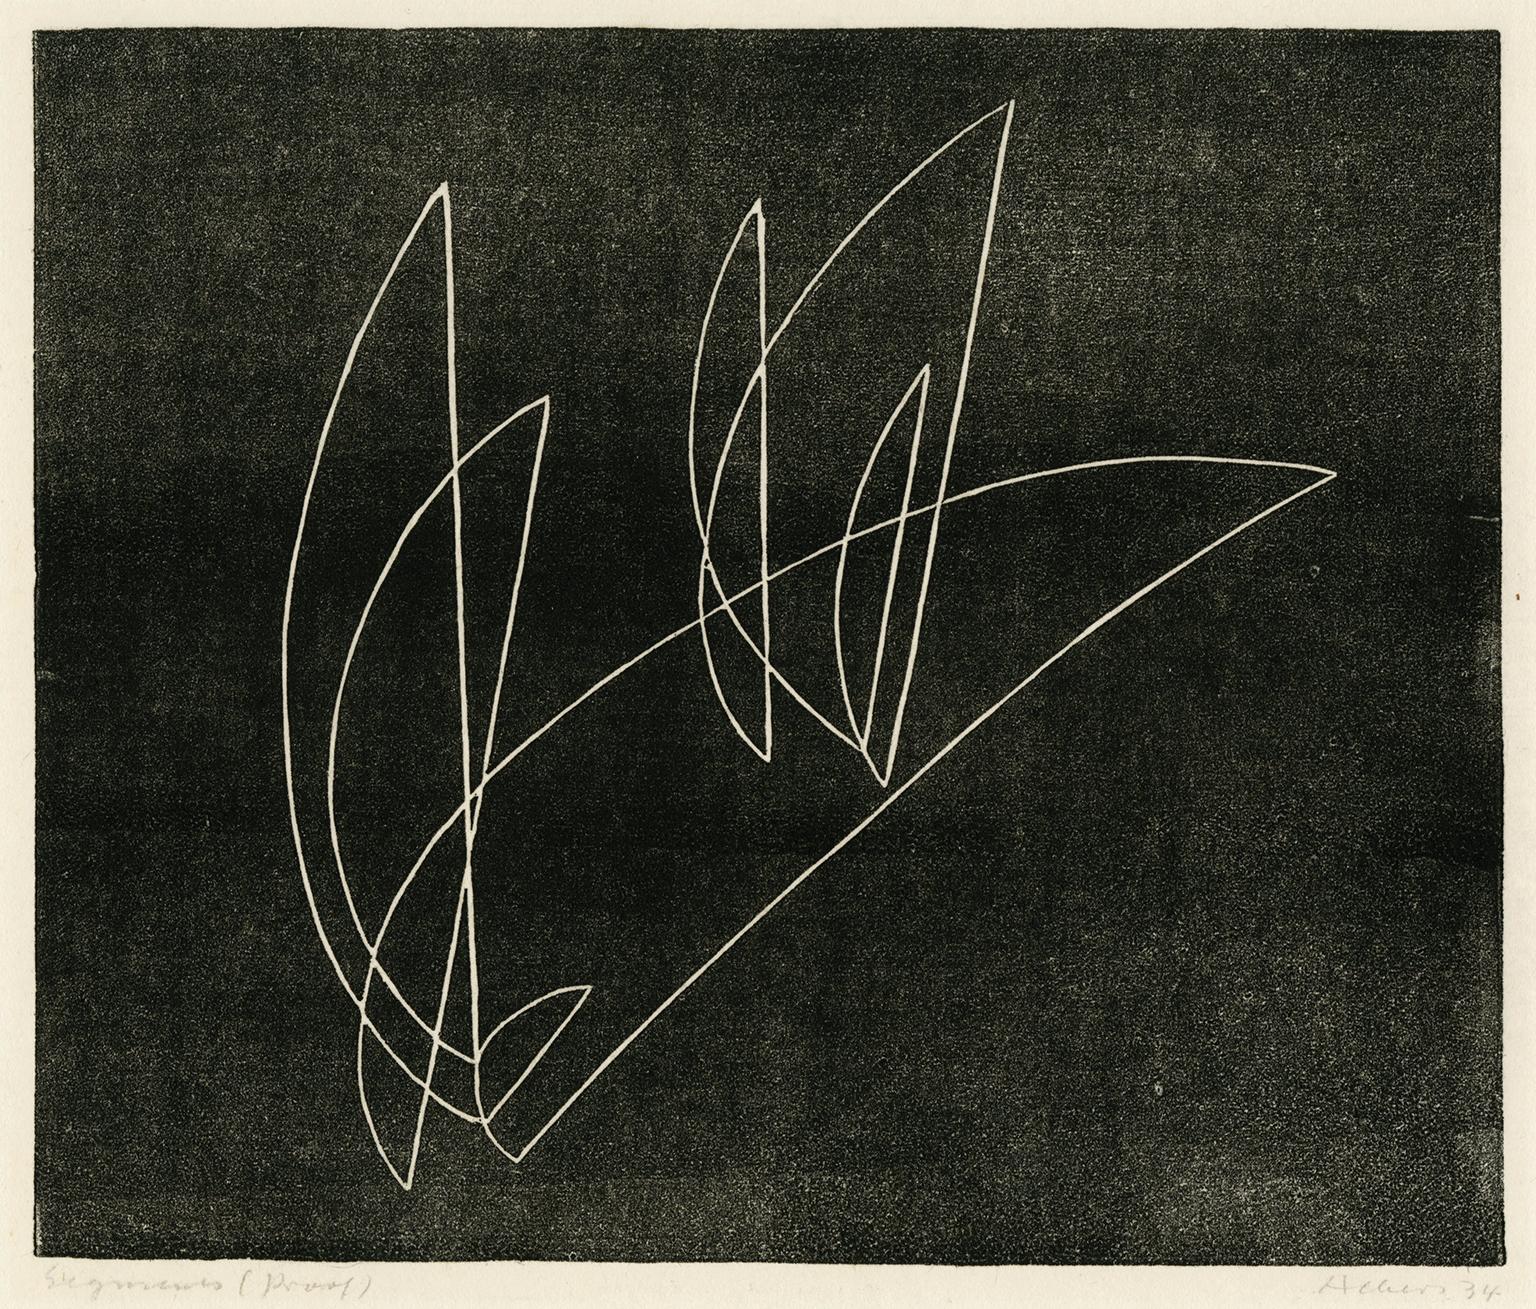 Josef Albers Abstract Print - 'Segments' — 1930s Geometric Abstraction